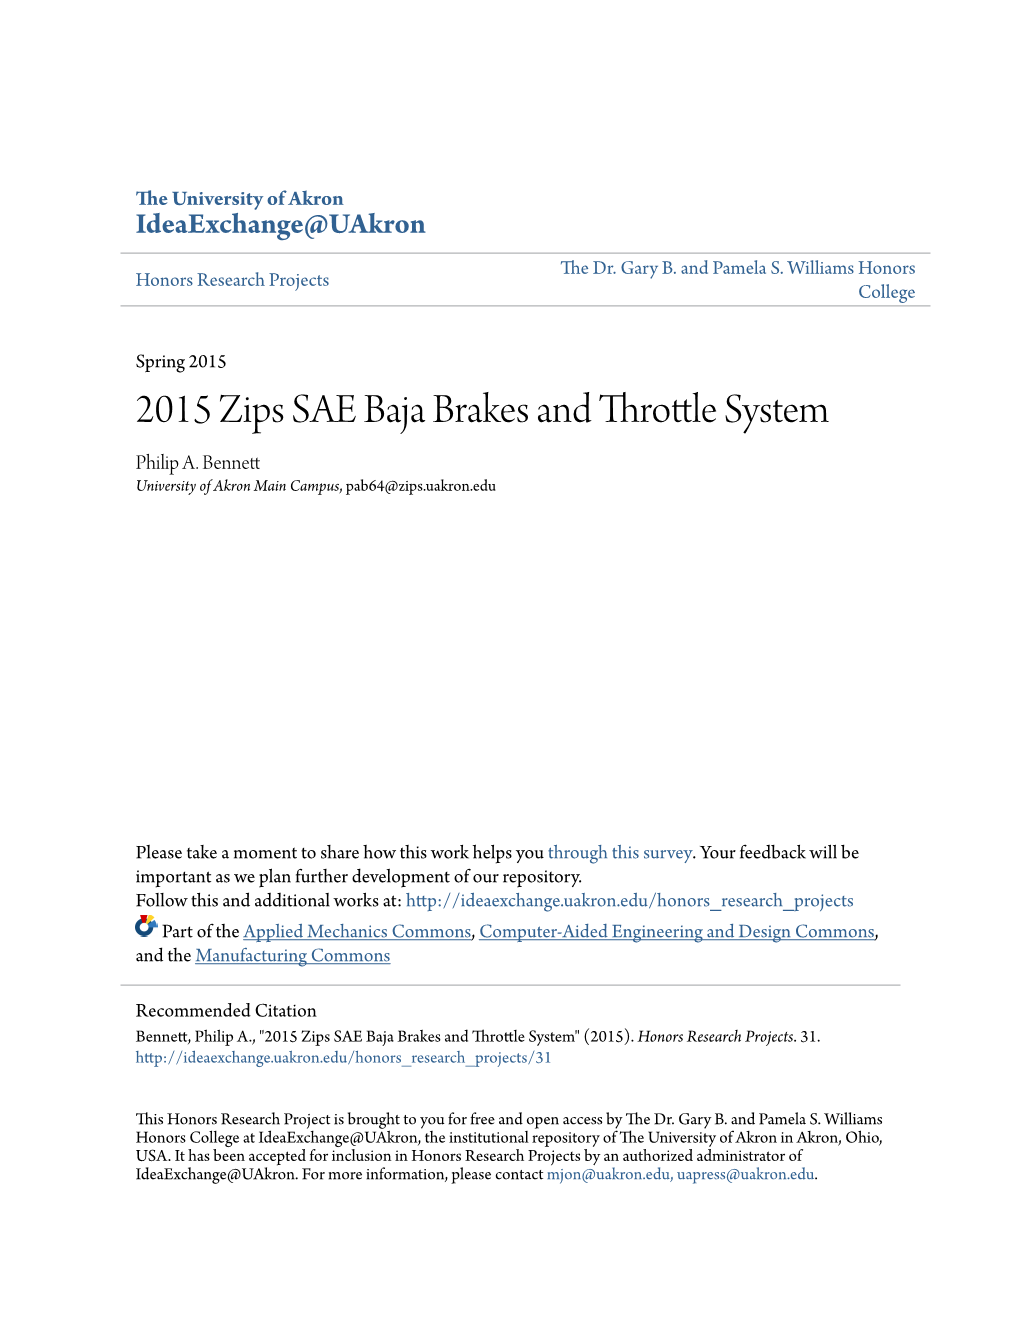 2015 Zips SAE Baja Brakes and Throttle System